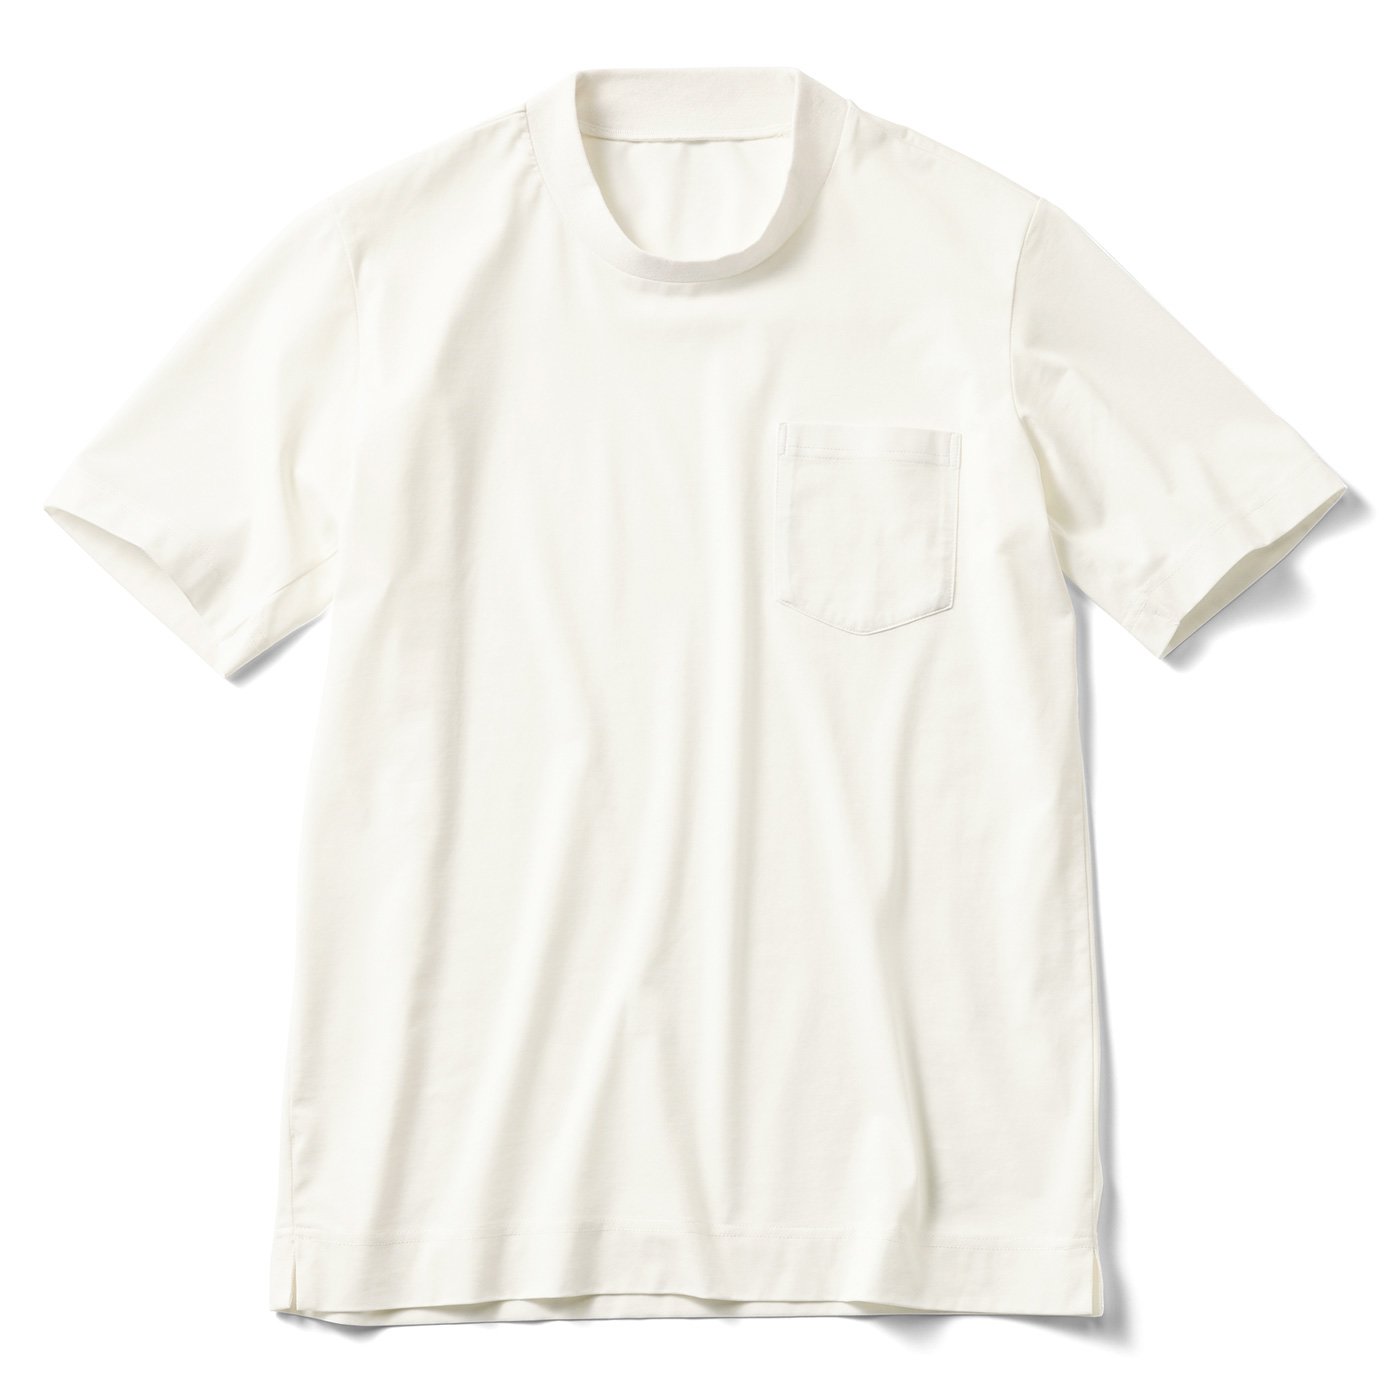 IEDIT[イディット] ジャケットインのためのシャツの代わりに着てほしい 美ノビ素材のメンズクルーネックプルオーバートップス〈オフホワイト〉